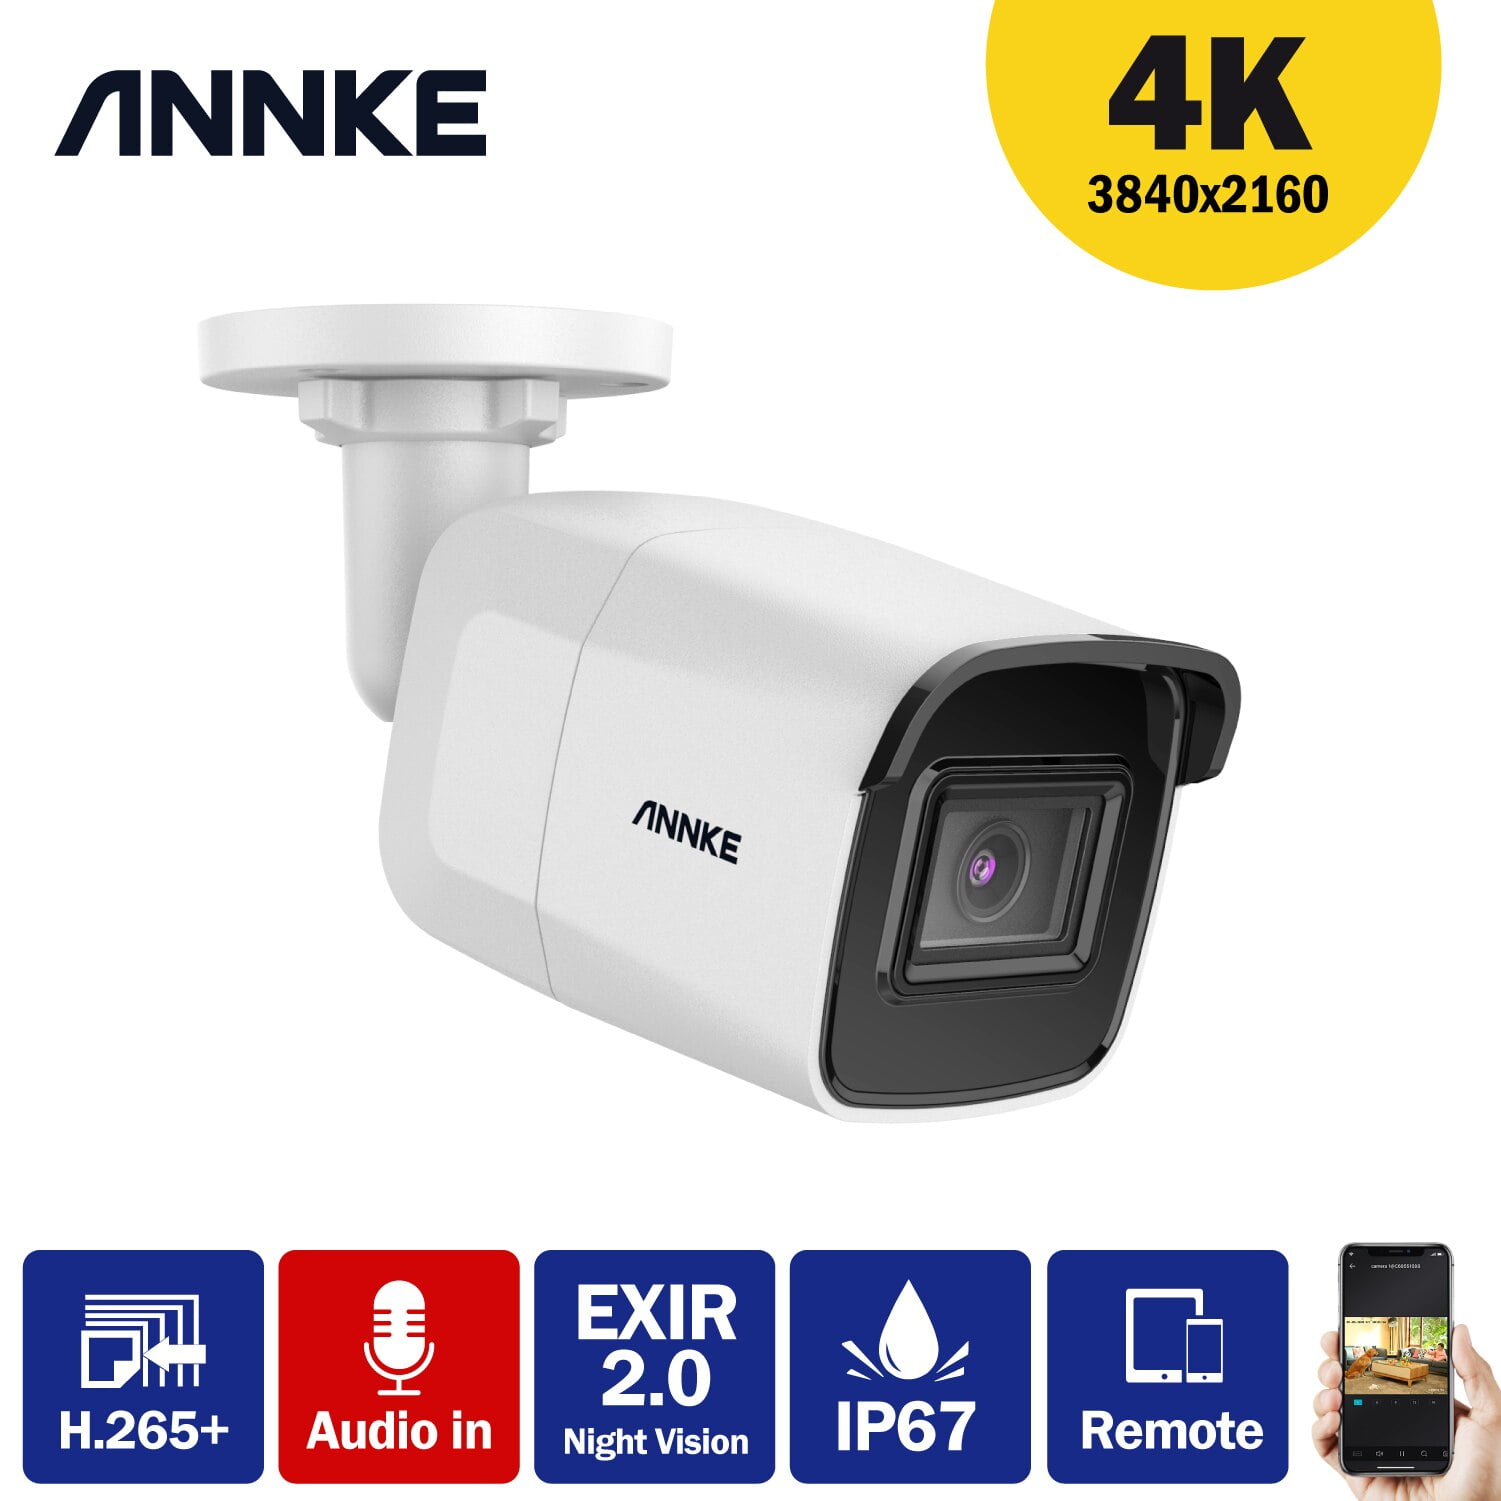 Hikvision 4K HIKVISION CCTV SYSTEM IP POE 8MP AUDIO MIC HD CAMERA NIGHTVISION SECURITY KIT 